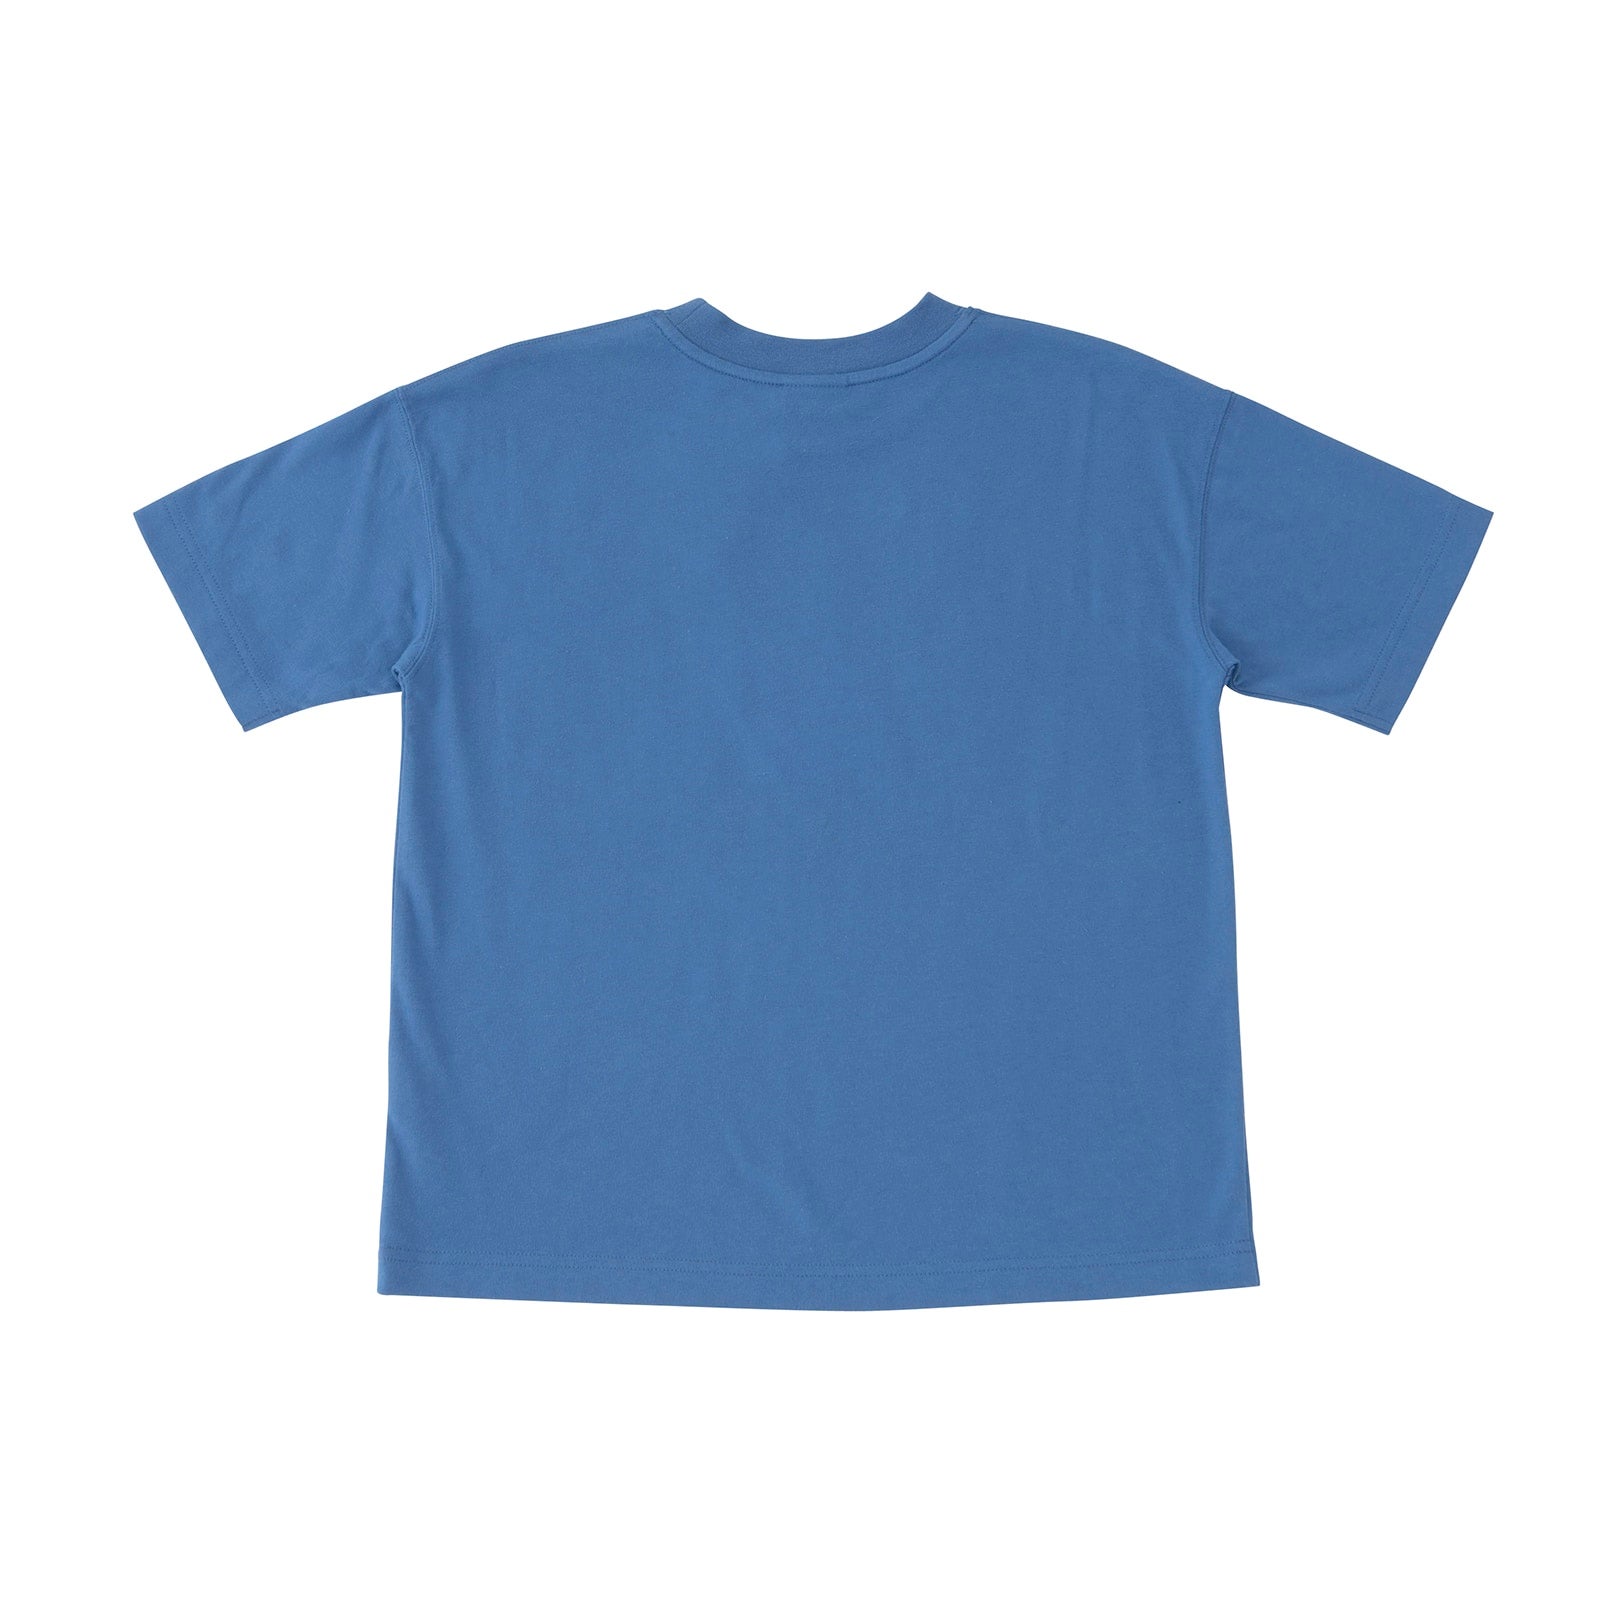 Moisture-wicking Graphic Short Sleeve T-Shirt